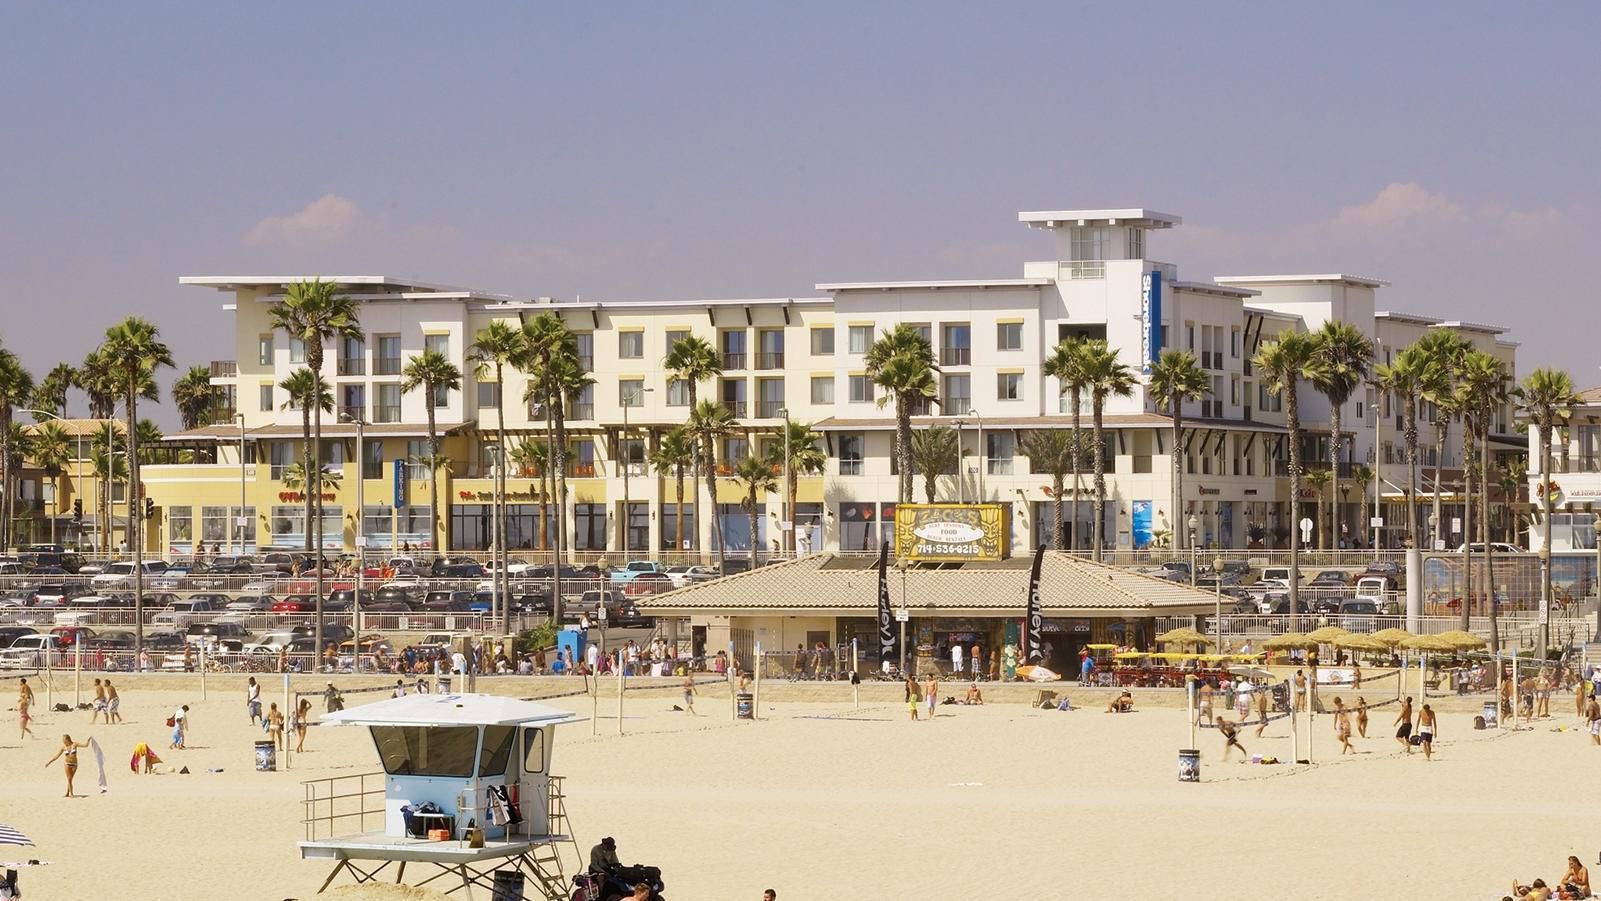 Shorebreak Resort in Huntington Beach